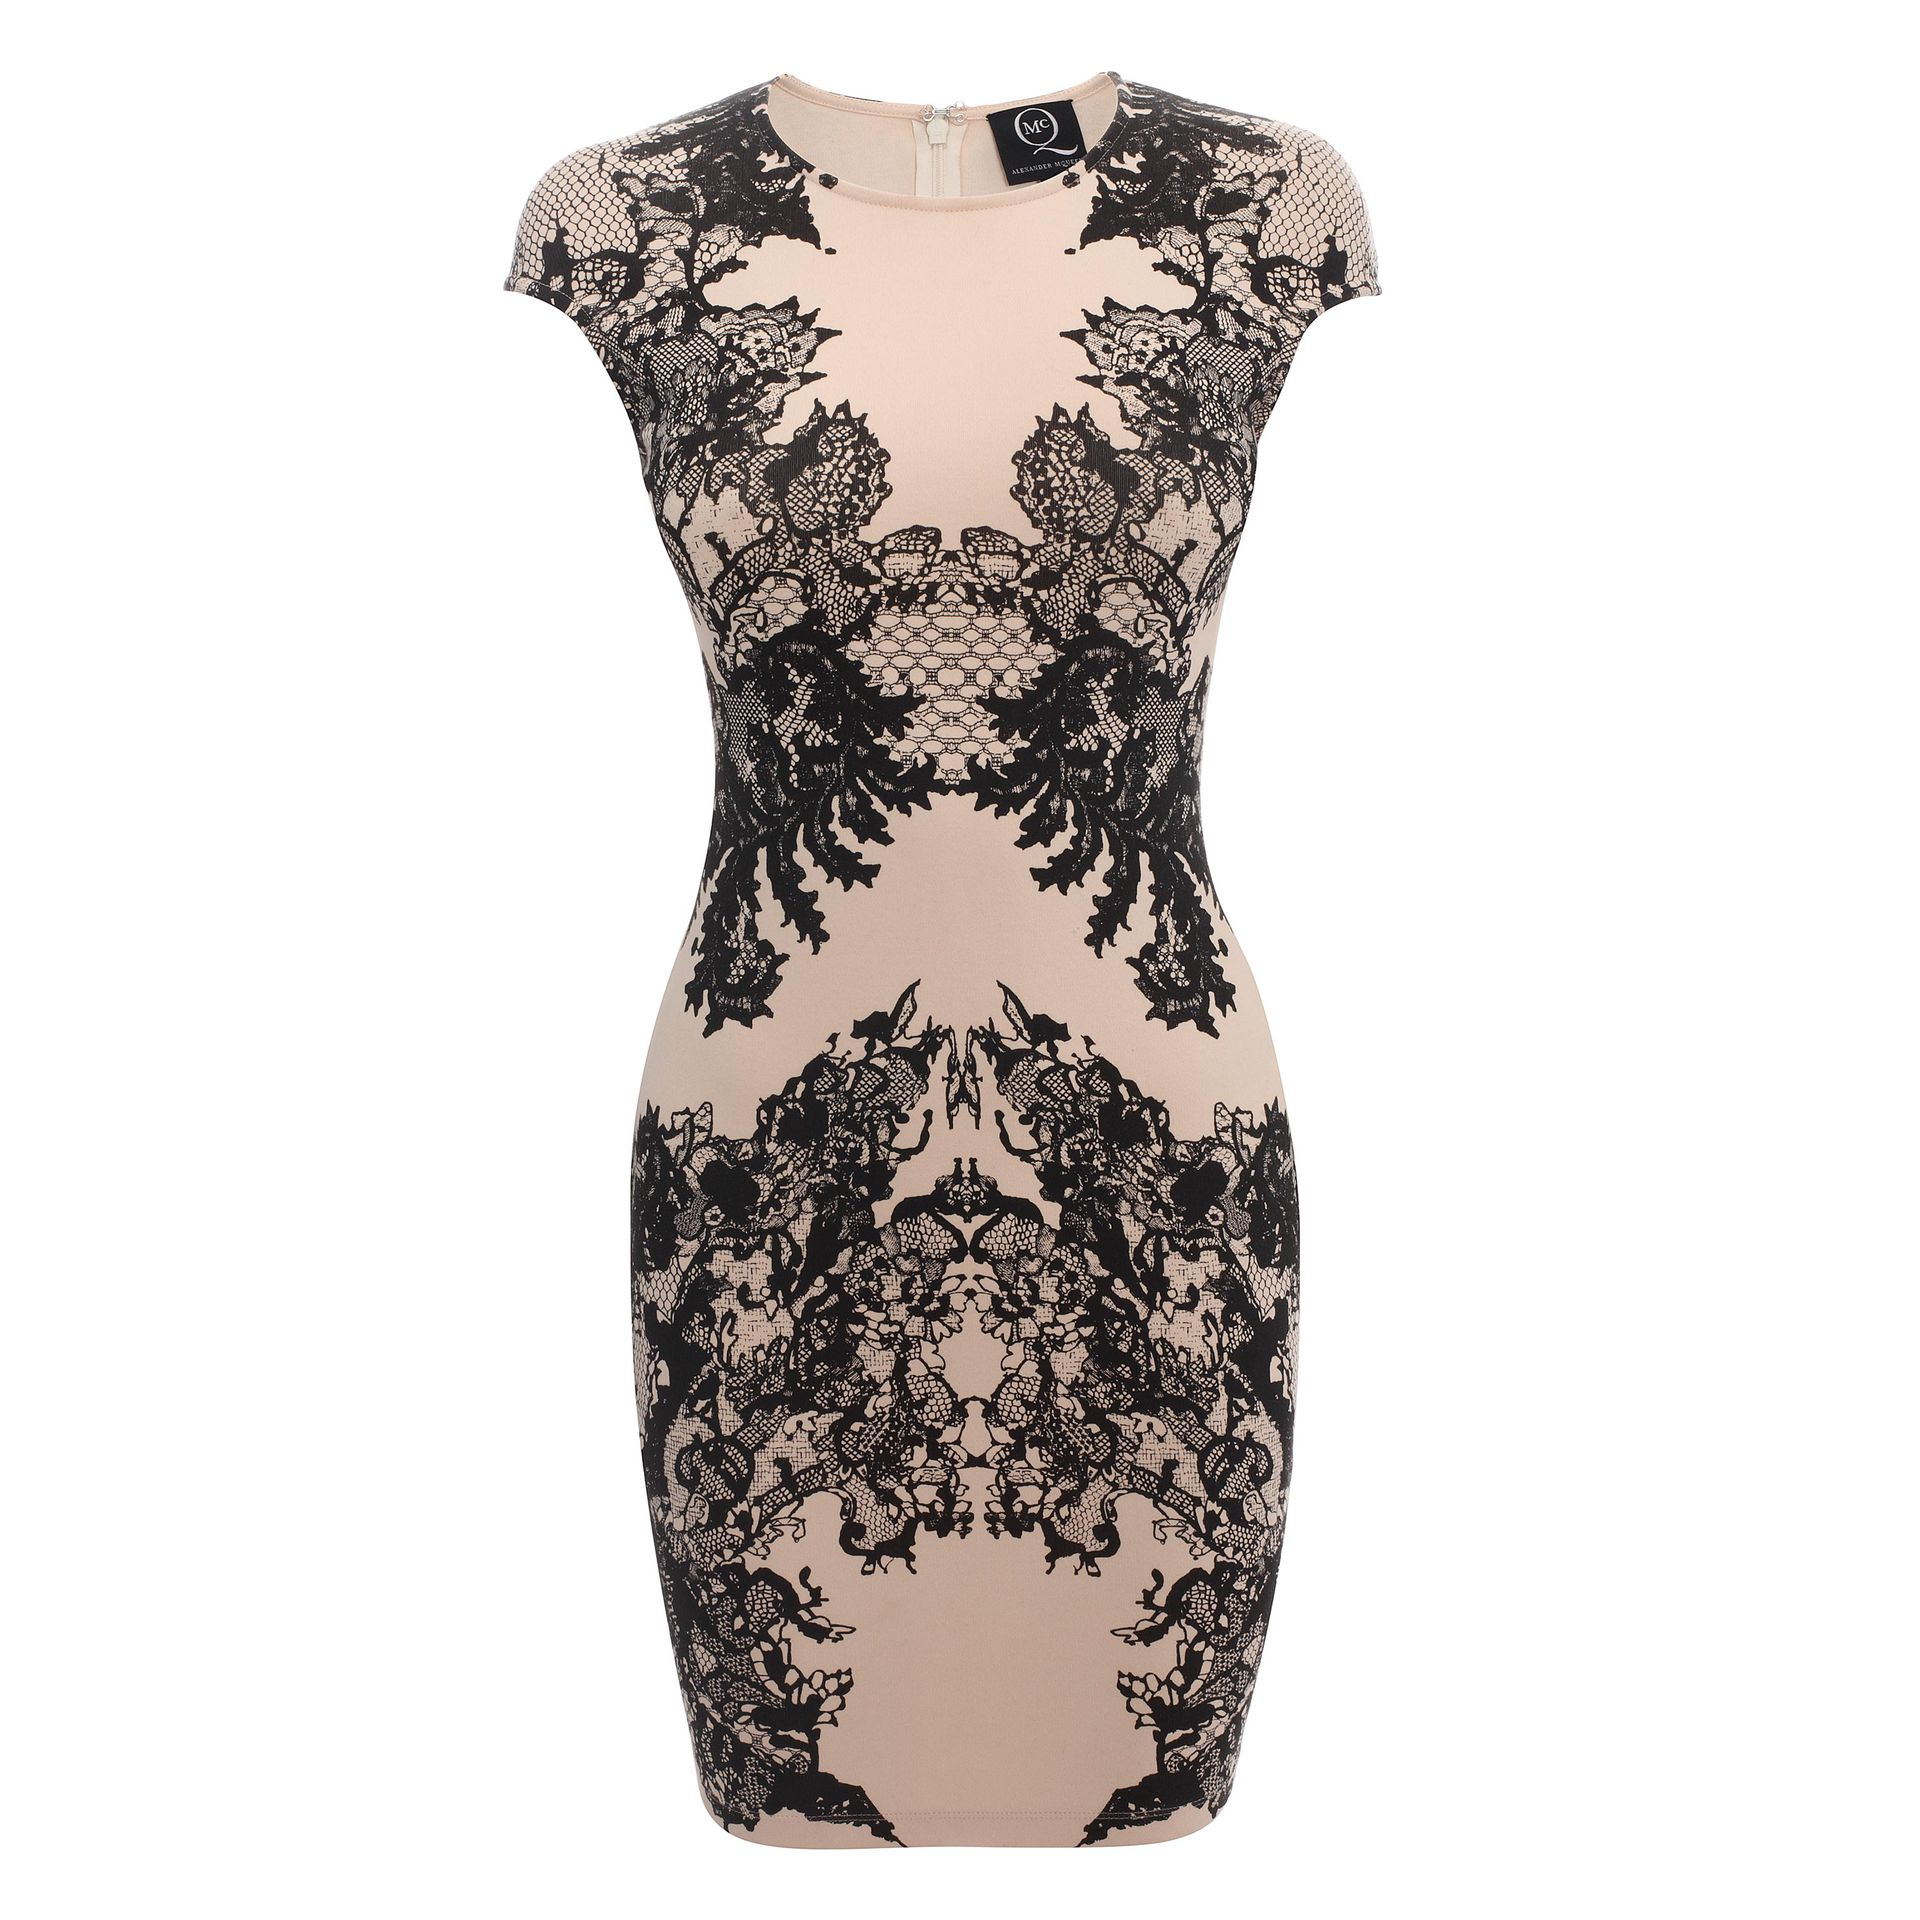 Lyst - Mcq Ornate Lace Print Cap Sleeve Dress in Black